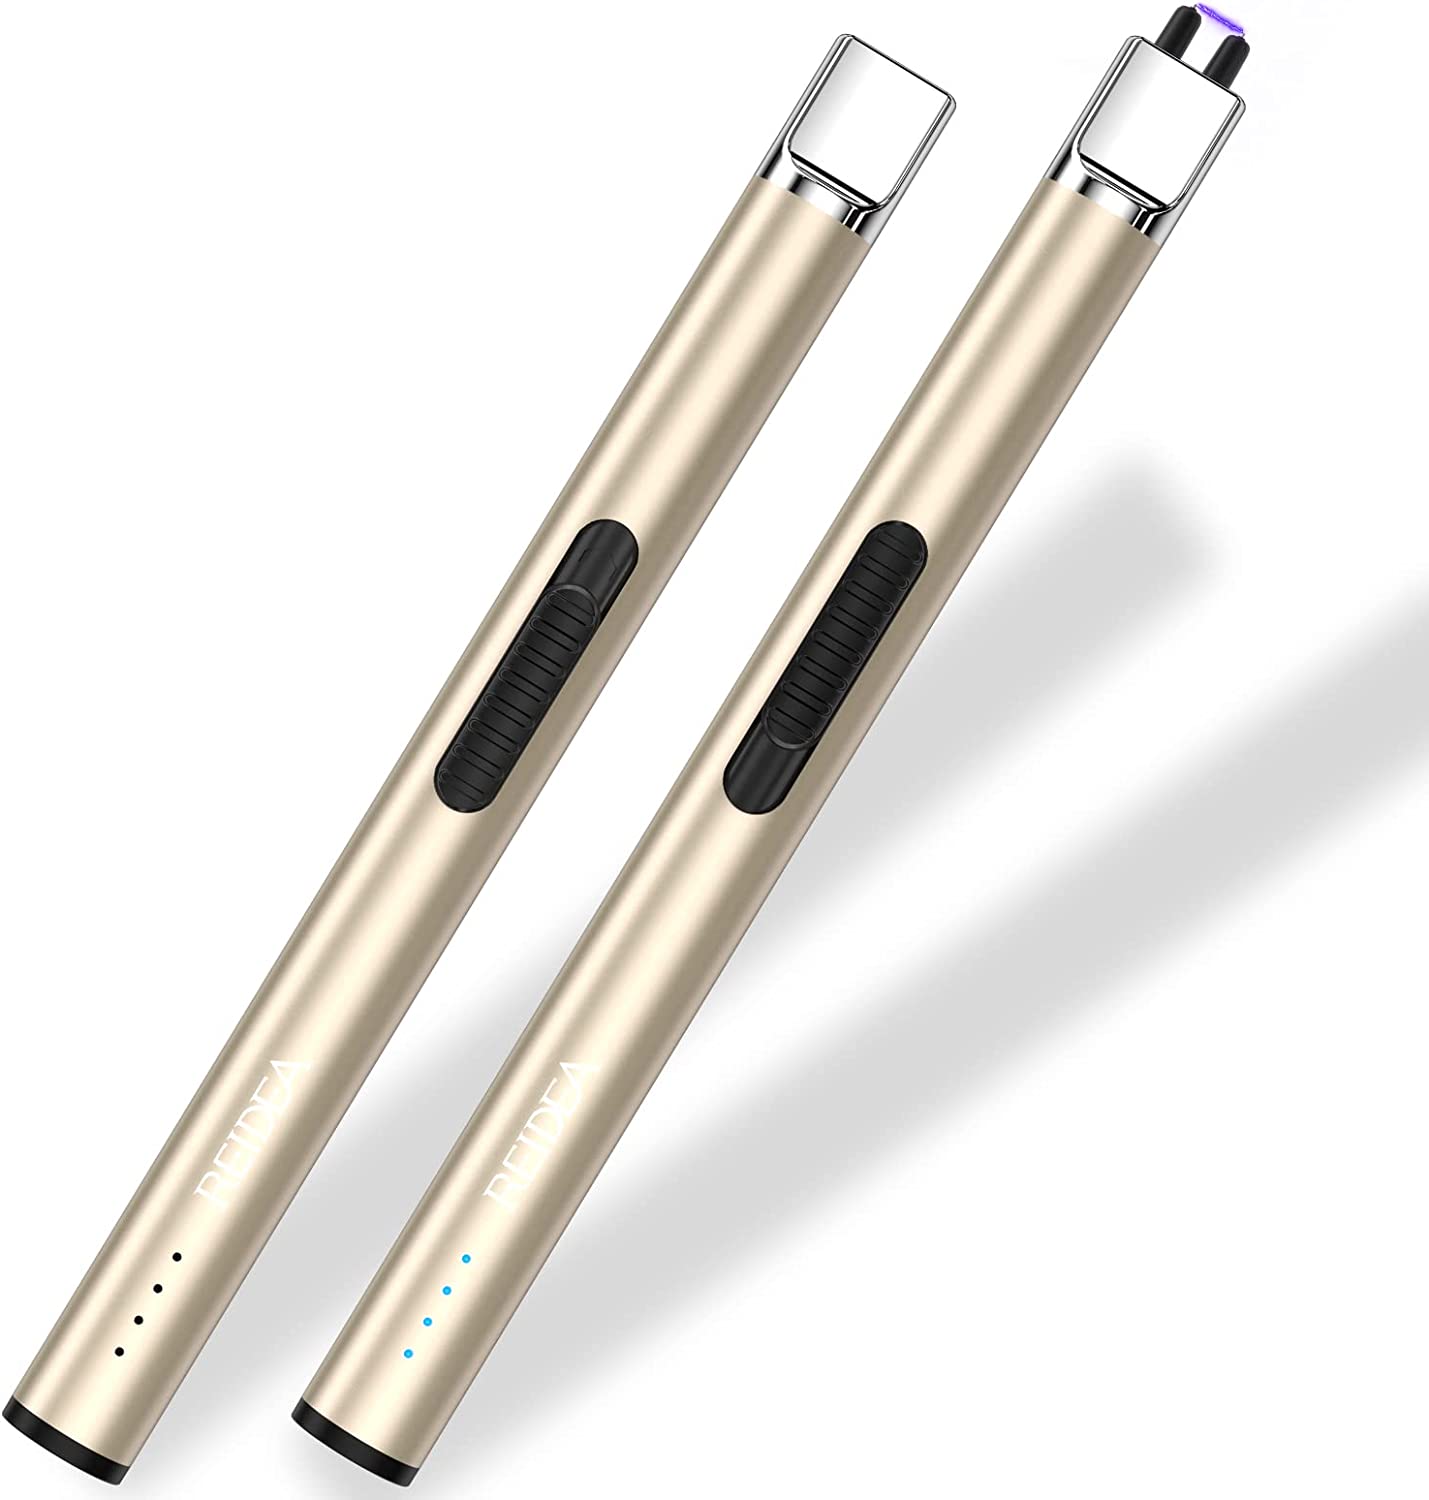 REIDEA S4 Pro Electric Arc Lighter, 2 Pack – REIDEA Official Store